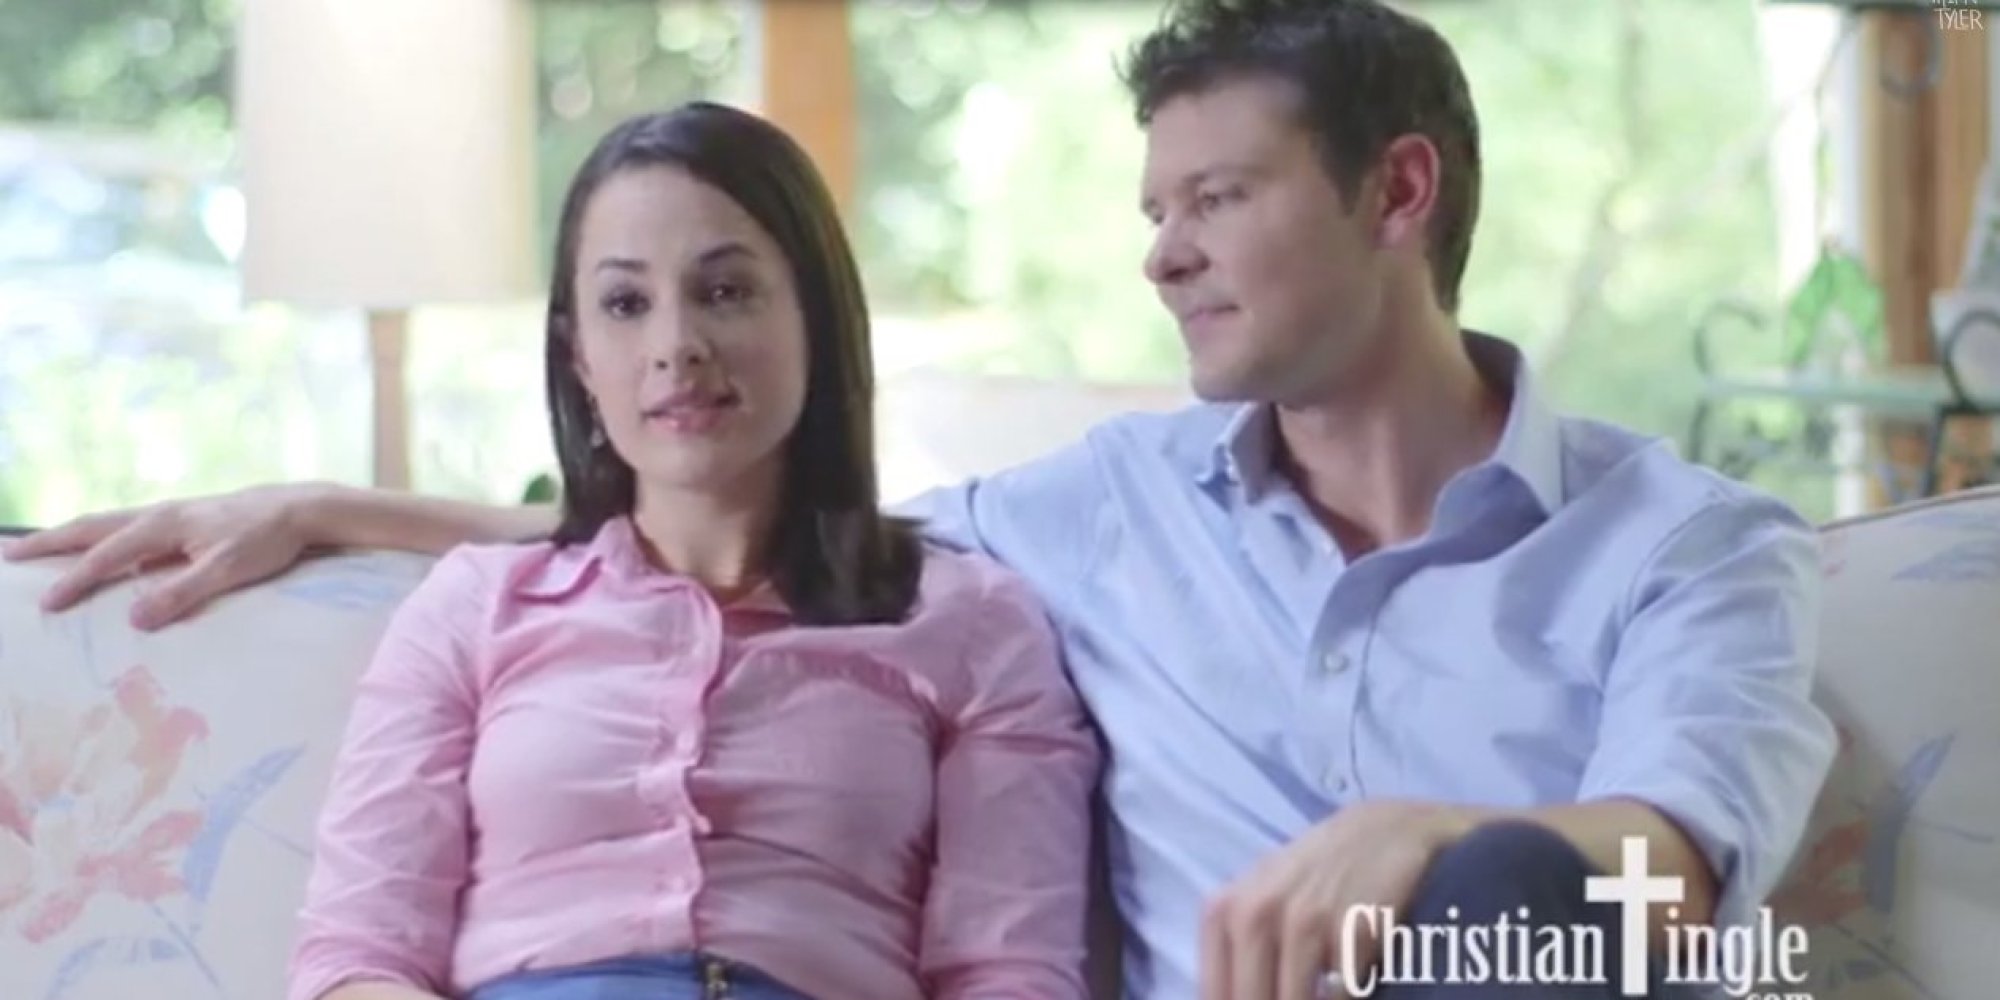 Konservative christian dating site